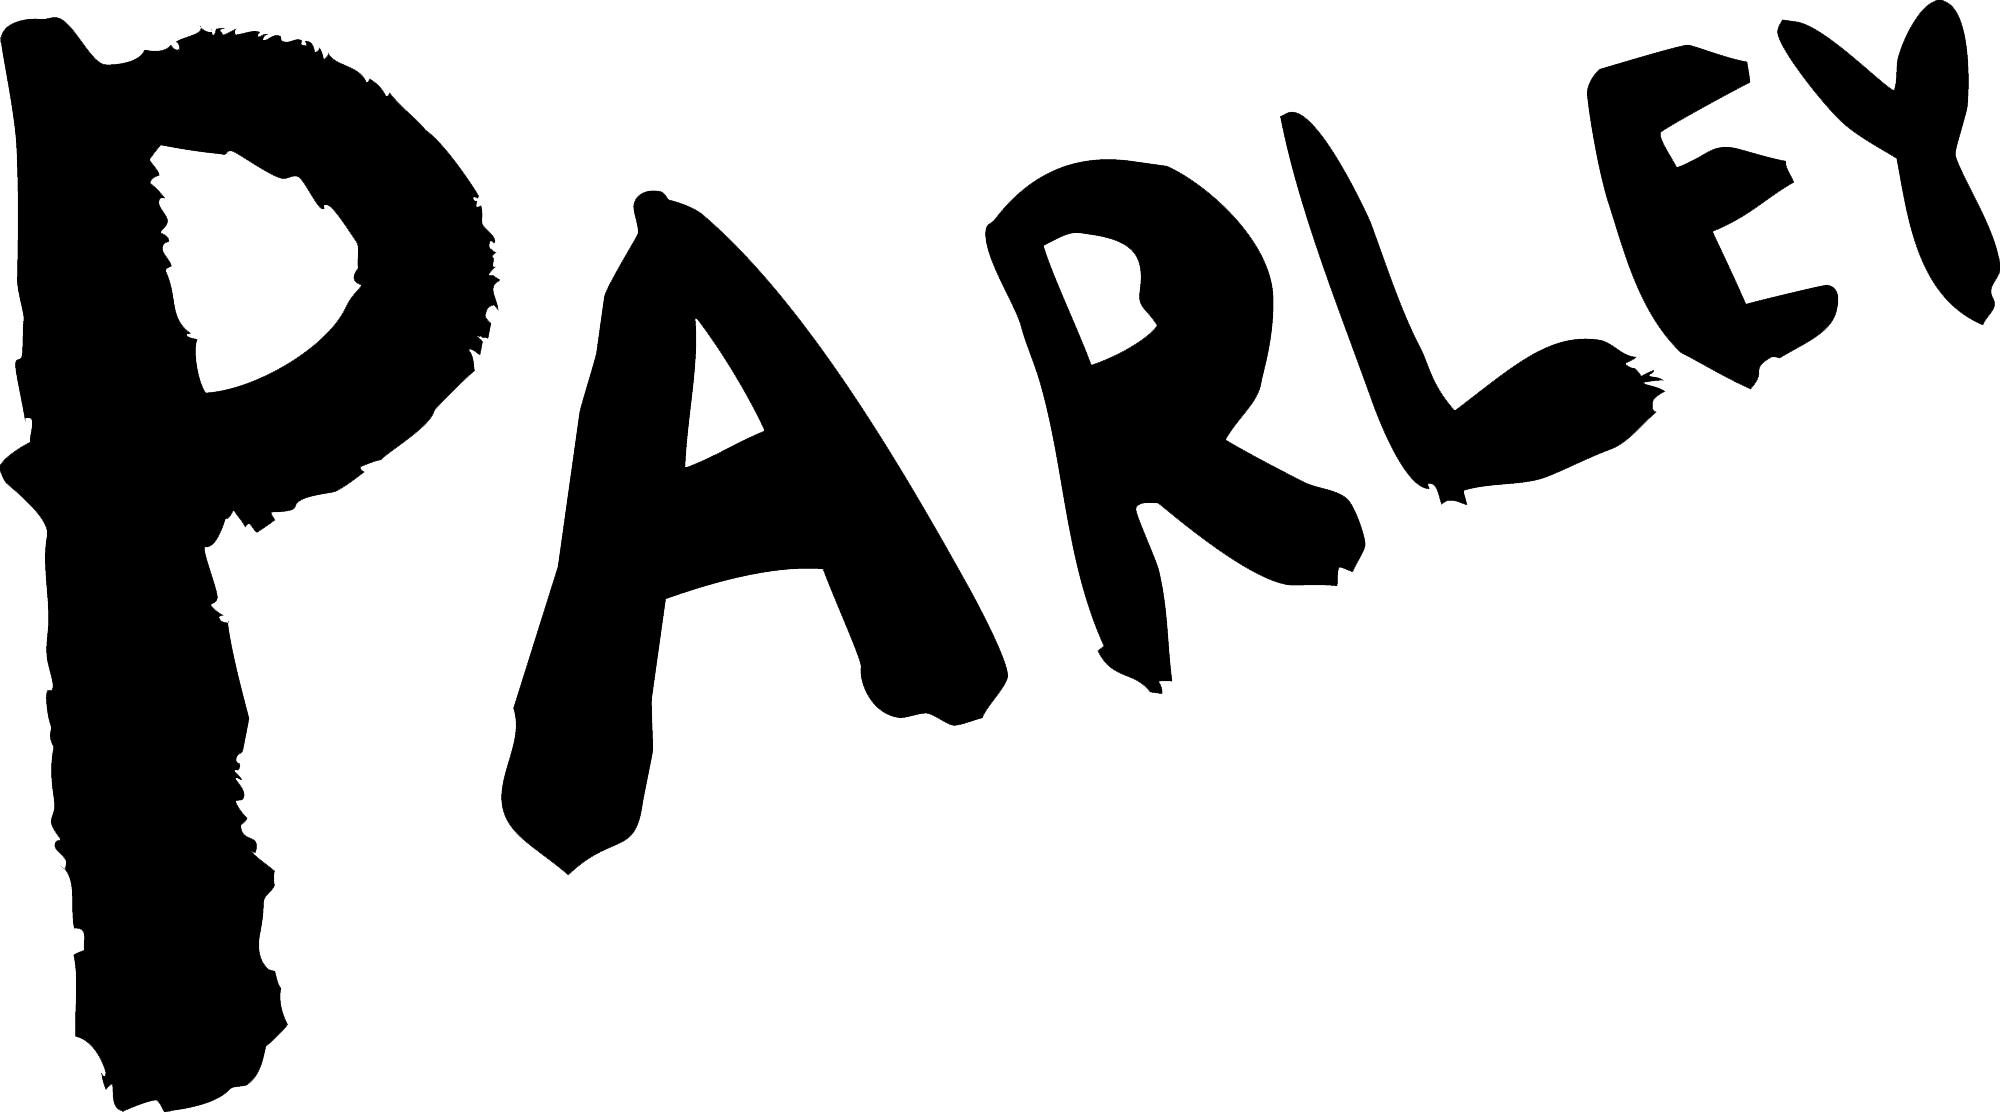 Parley logo.png